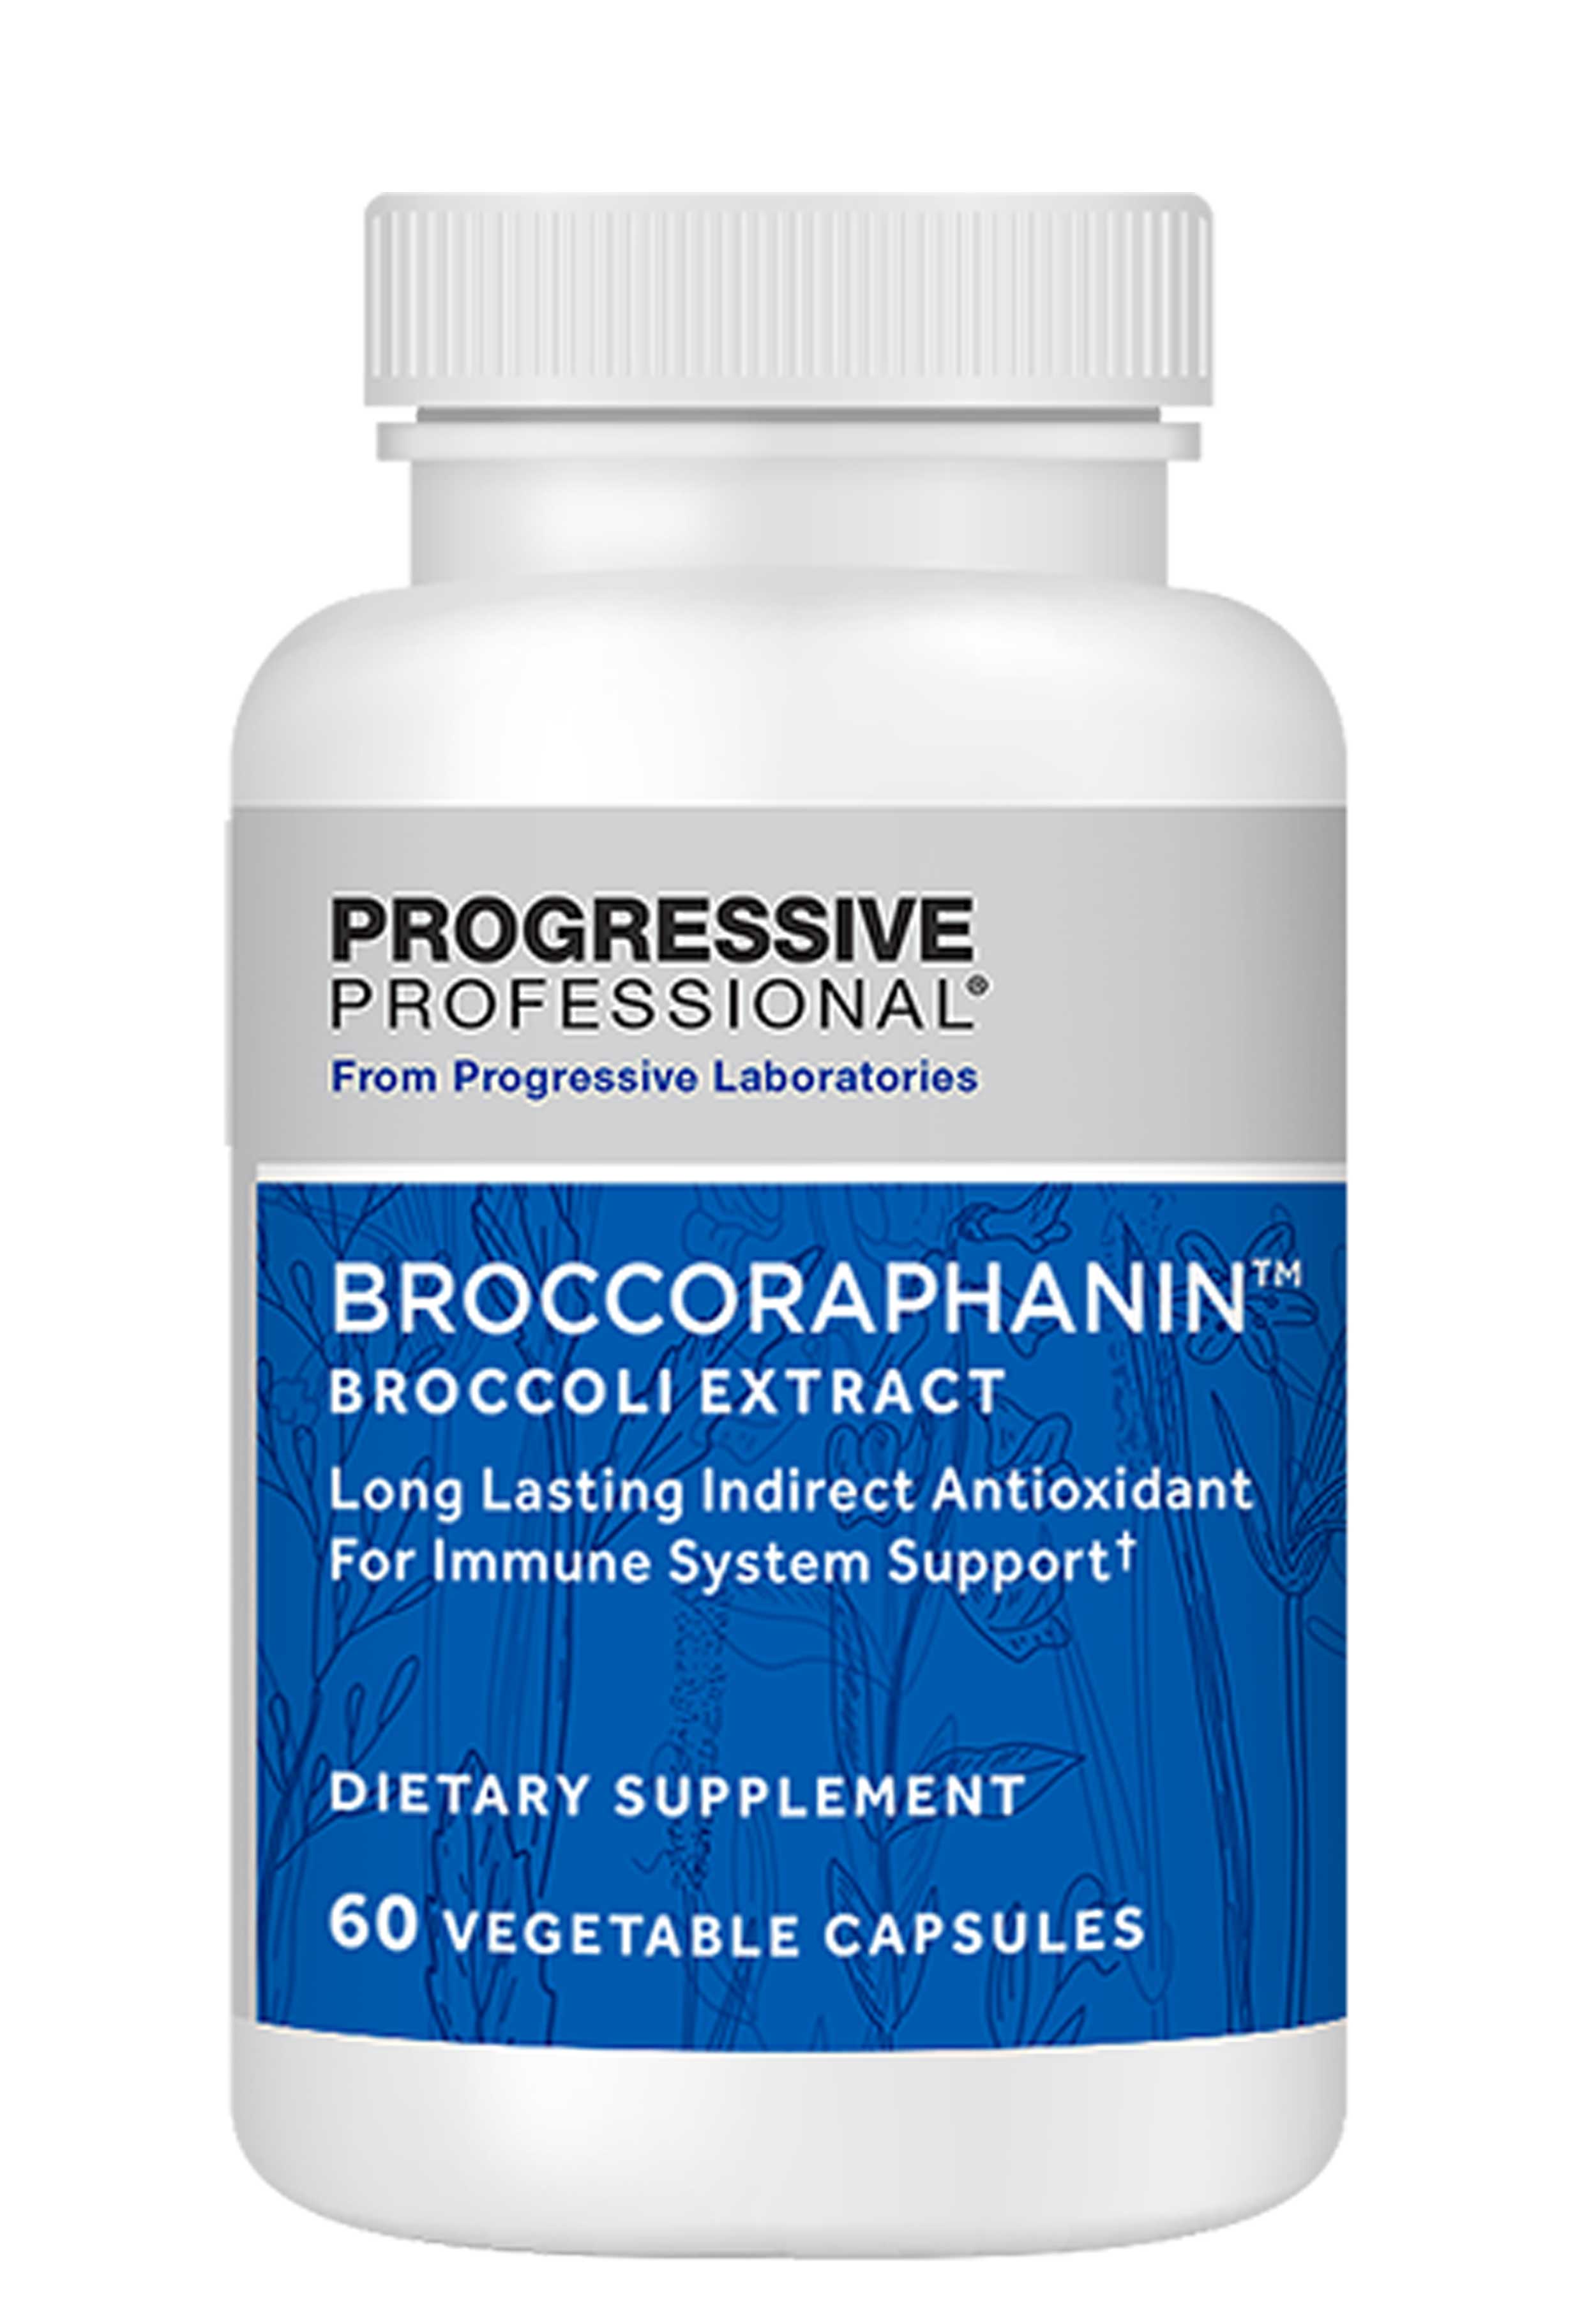 Progressive Laboratories BroccoRaphanin